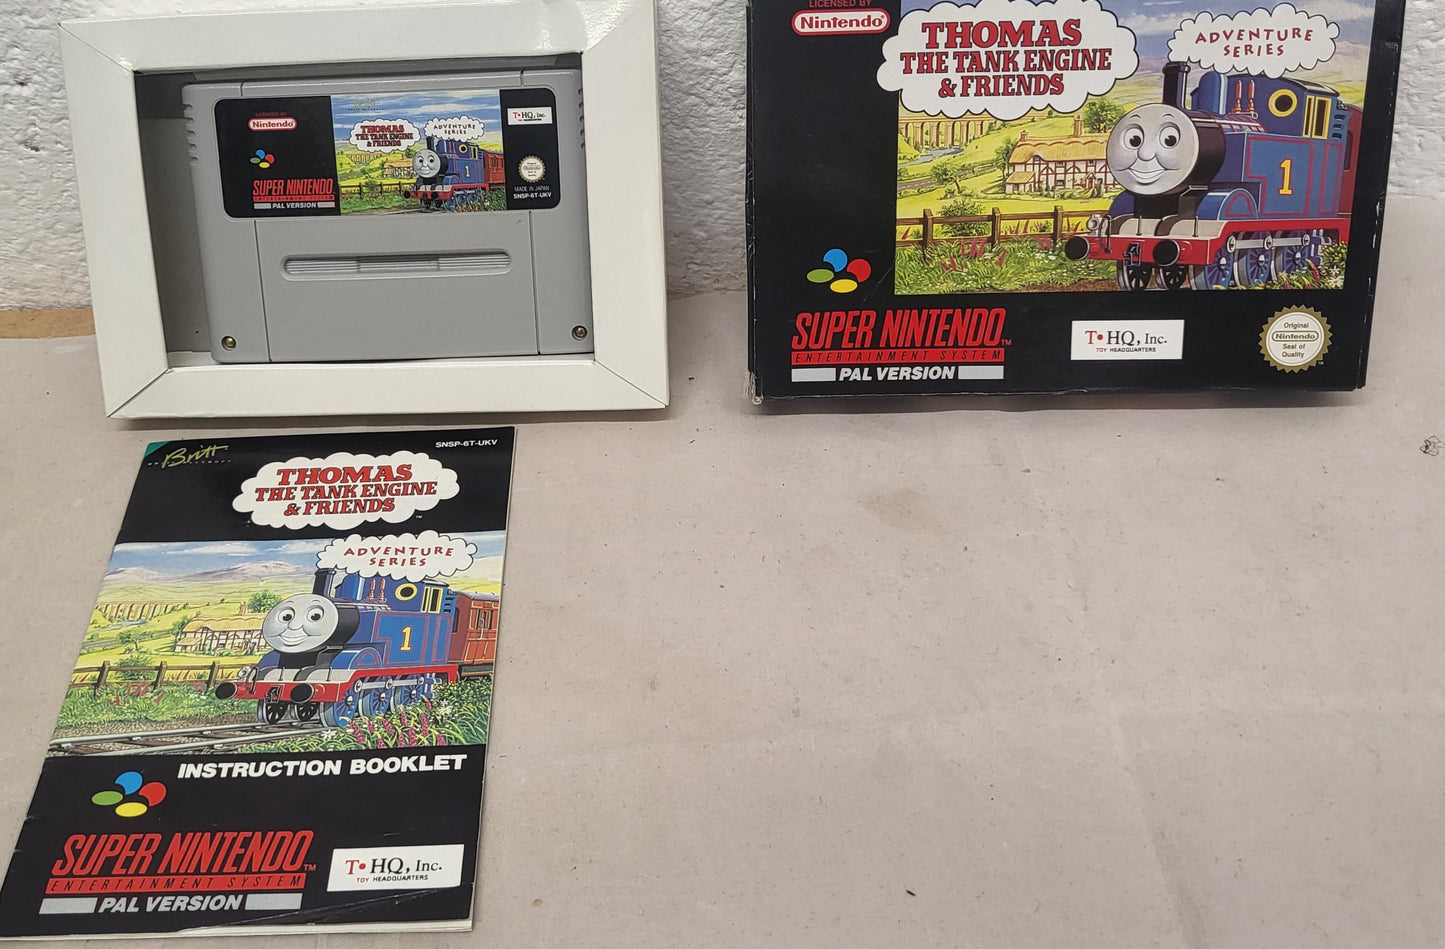 Thomas The Tank Engine & Friends SNES (Super Nintendo entertainment System)